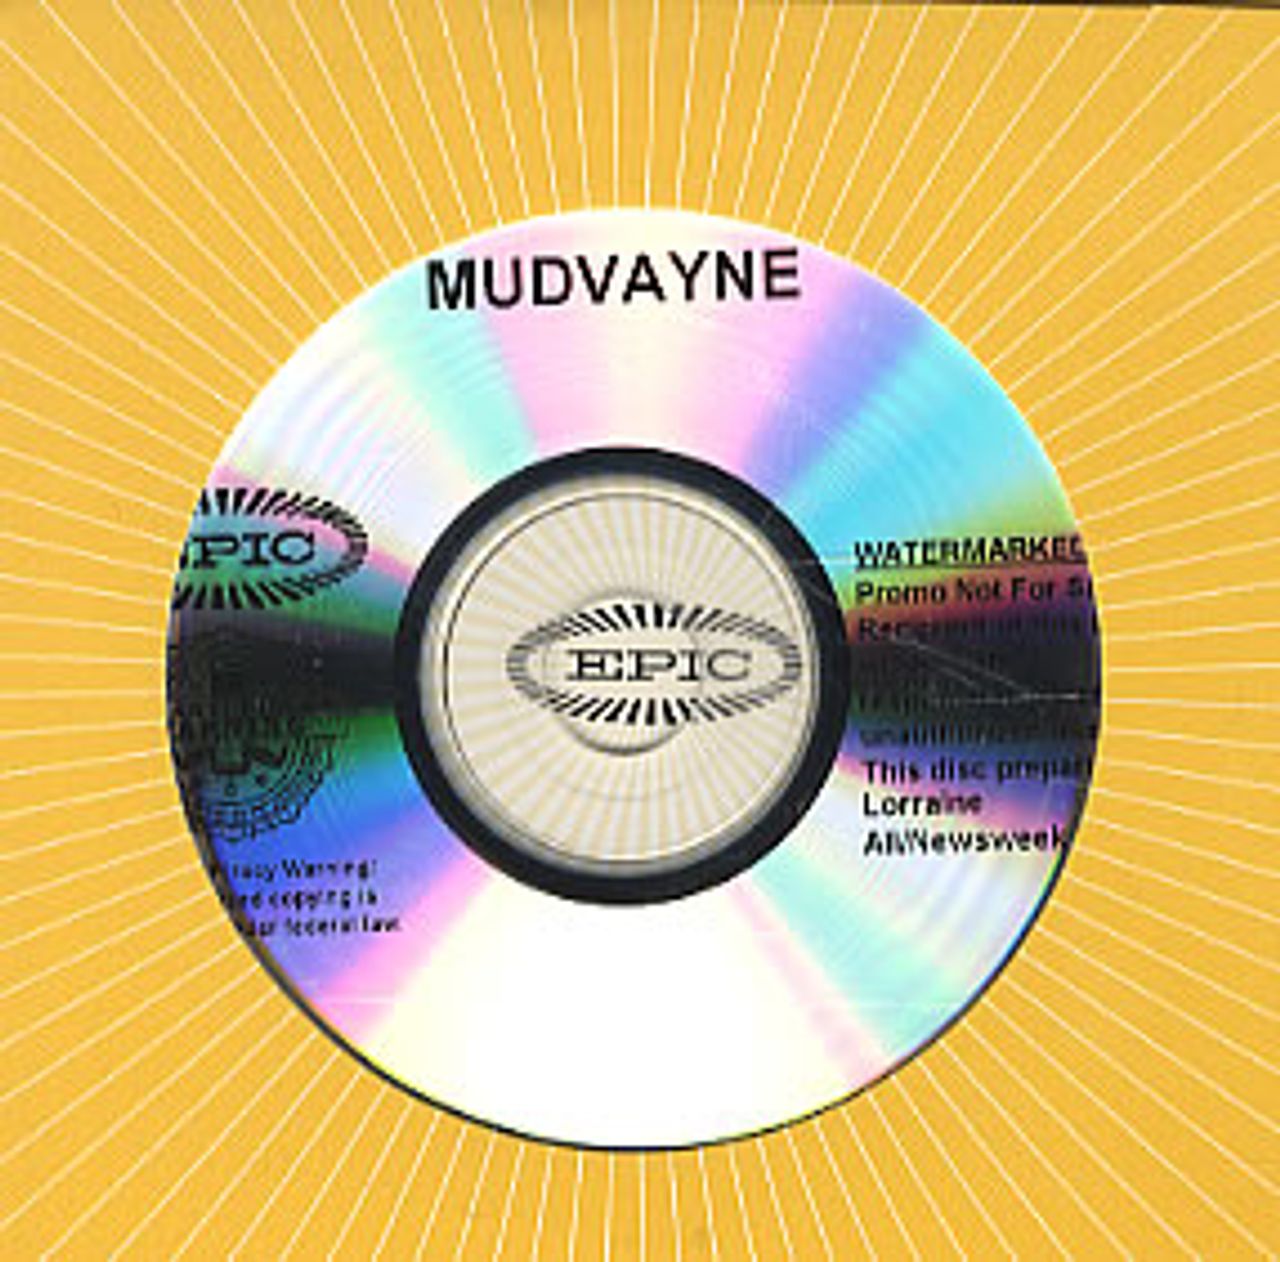 Mudvayne Mudvayne - Lost And Found US CD-R acetate CDR ACETATE